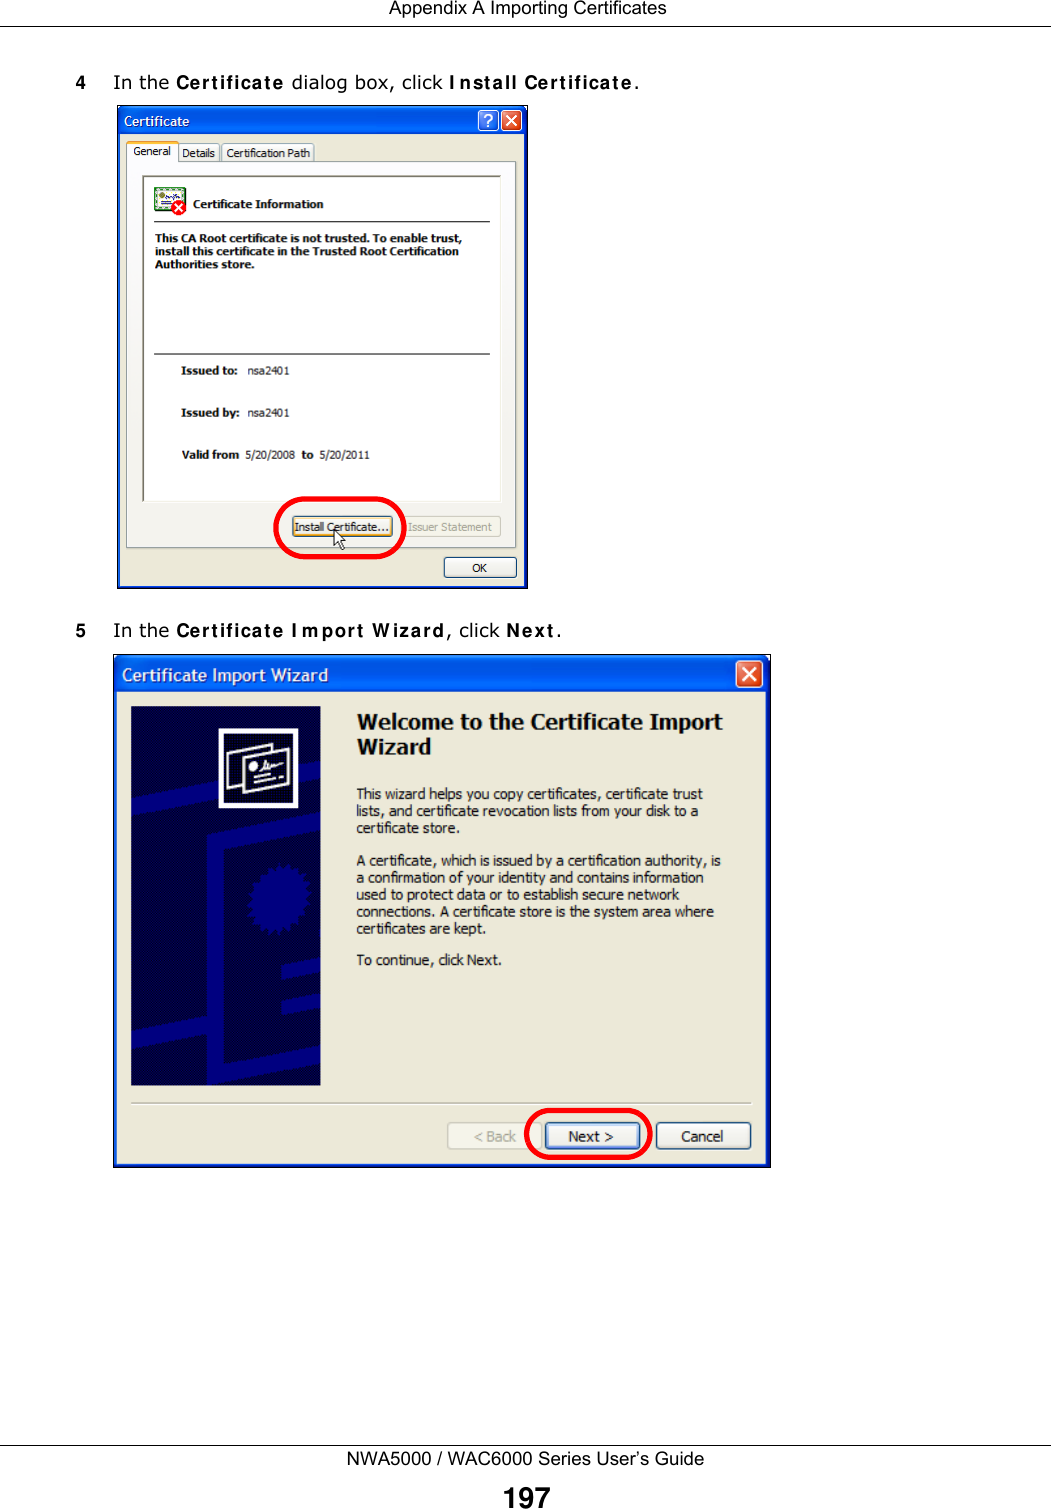  Appendix A Importing CertificatesNWA5000 / WAC6000 Series User’s Guide1974In the Certificate dialog box, click Install Certificate.5In the Certificate Import Wizard, click Next.